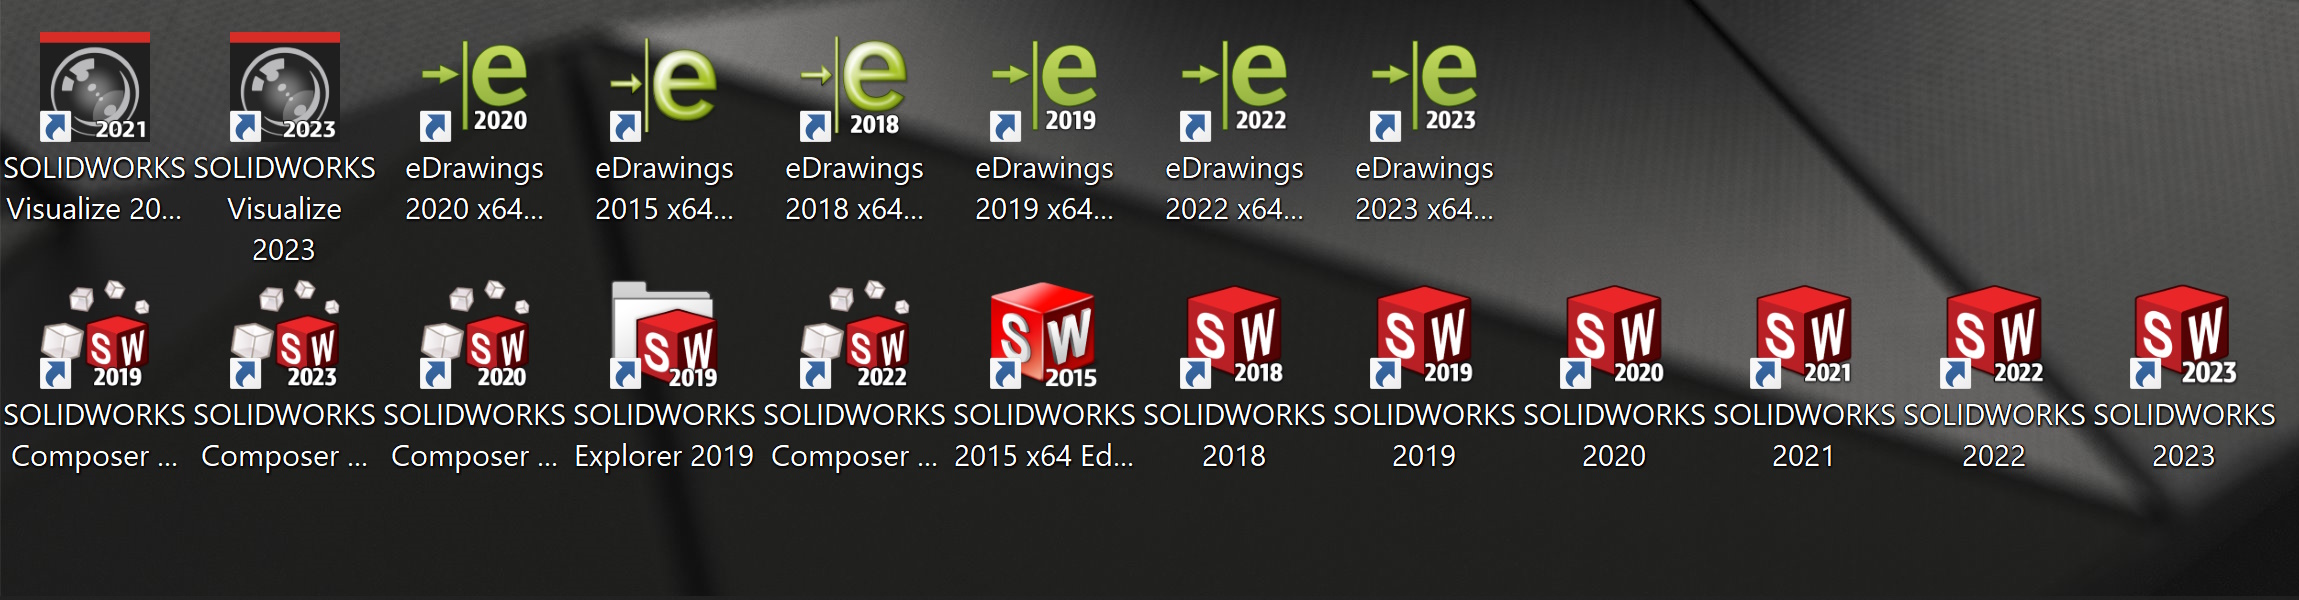 solidworks downloads